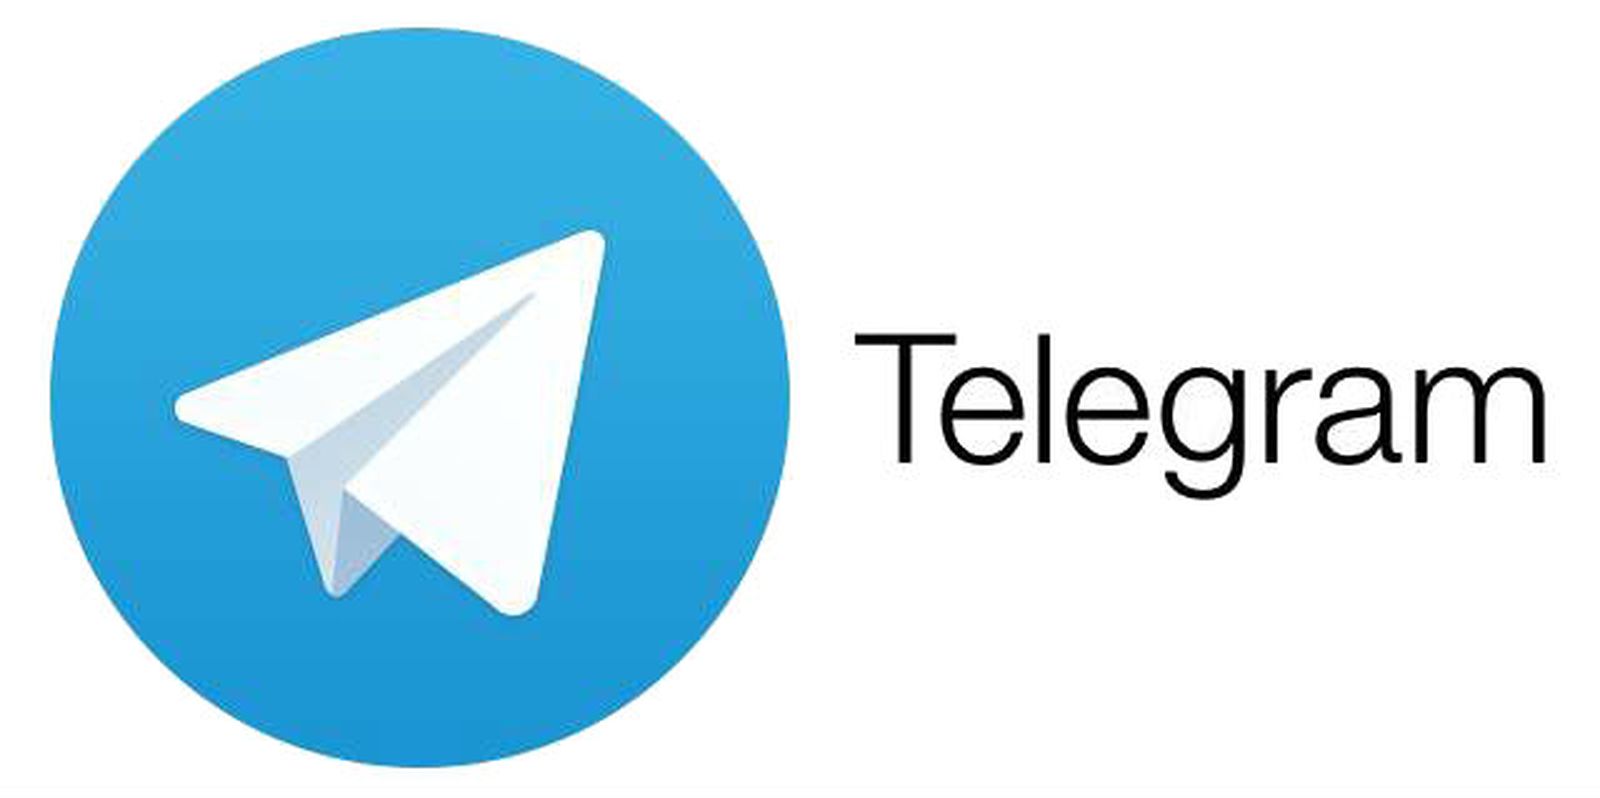 what is the app telegram